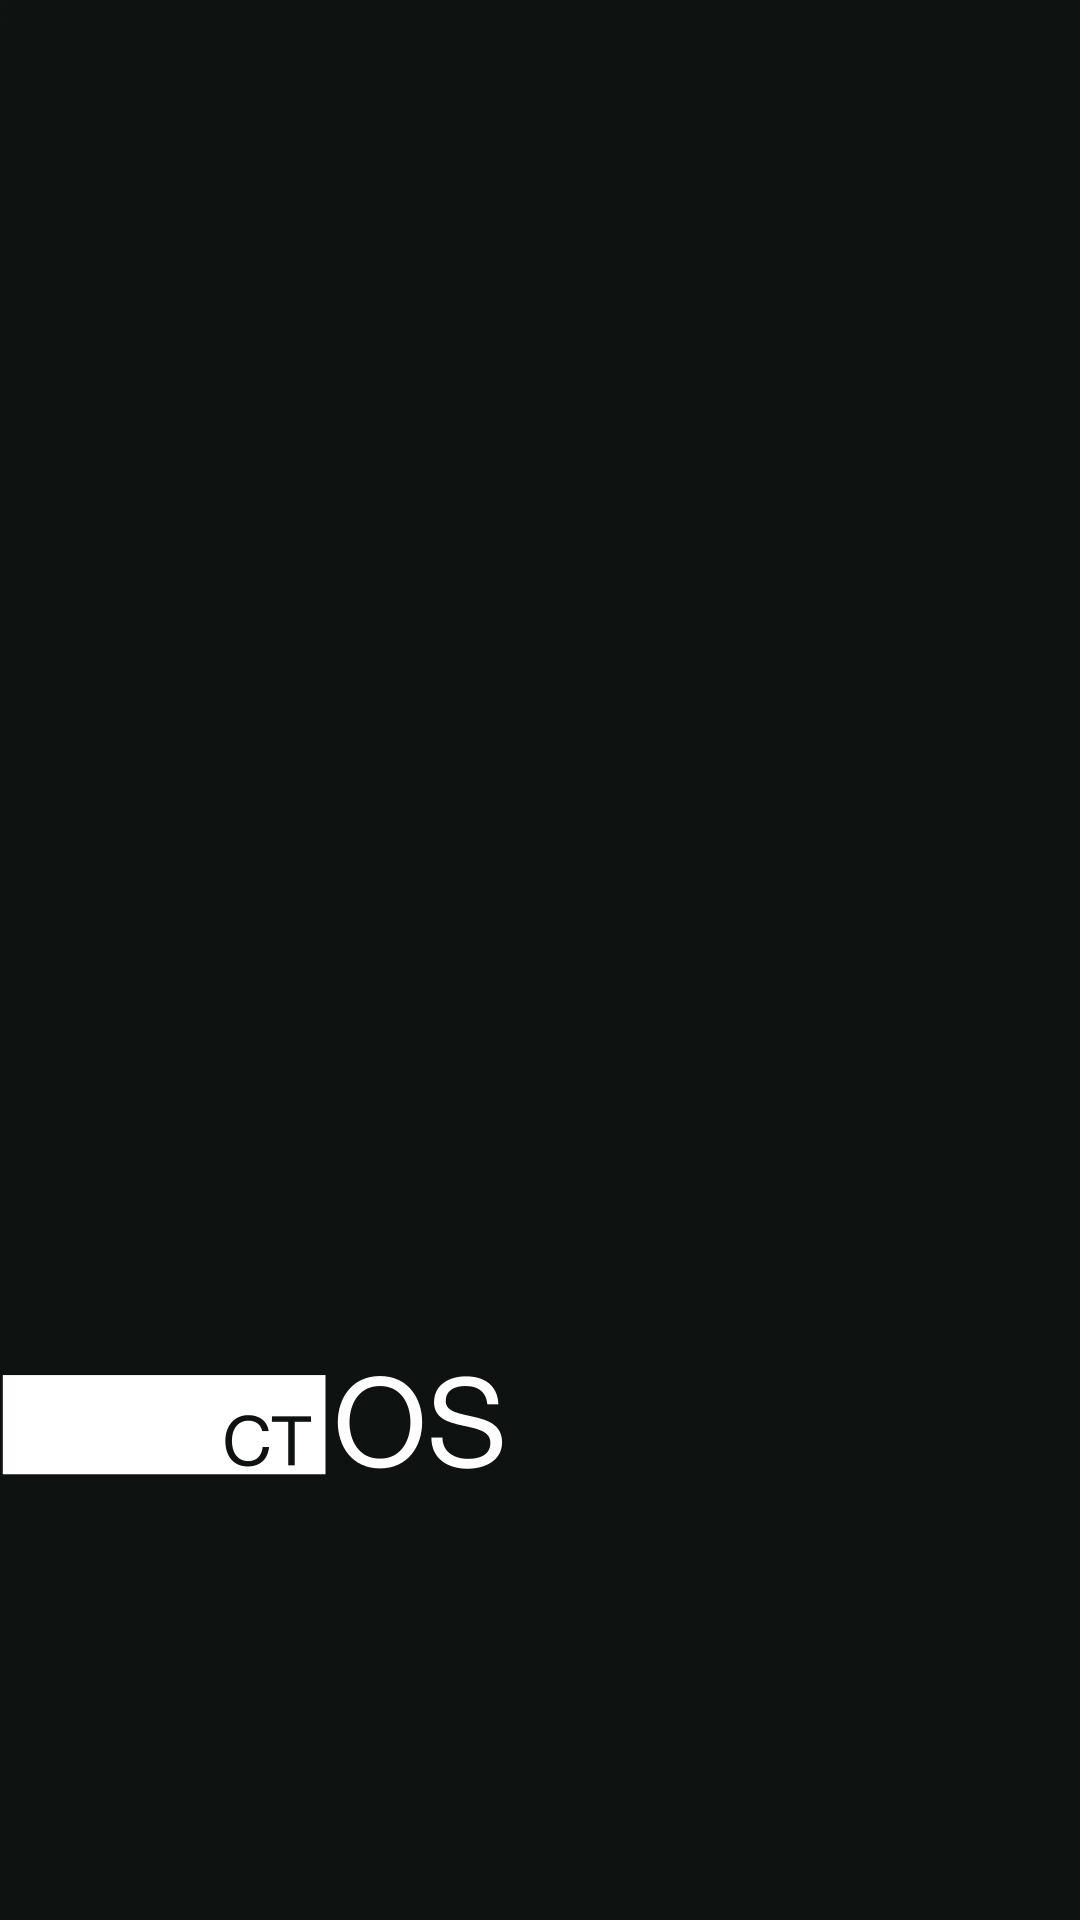 Ctos Test By Sirtheviking